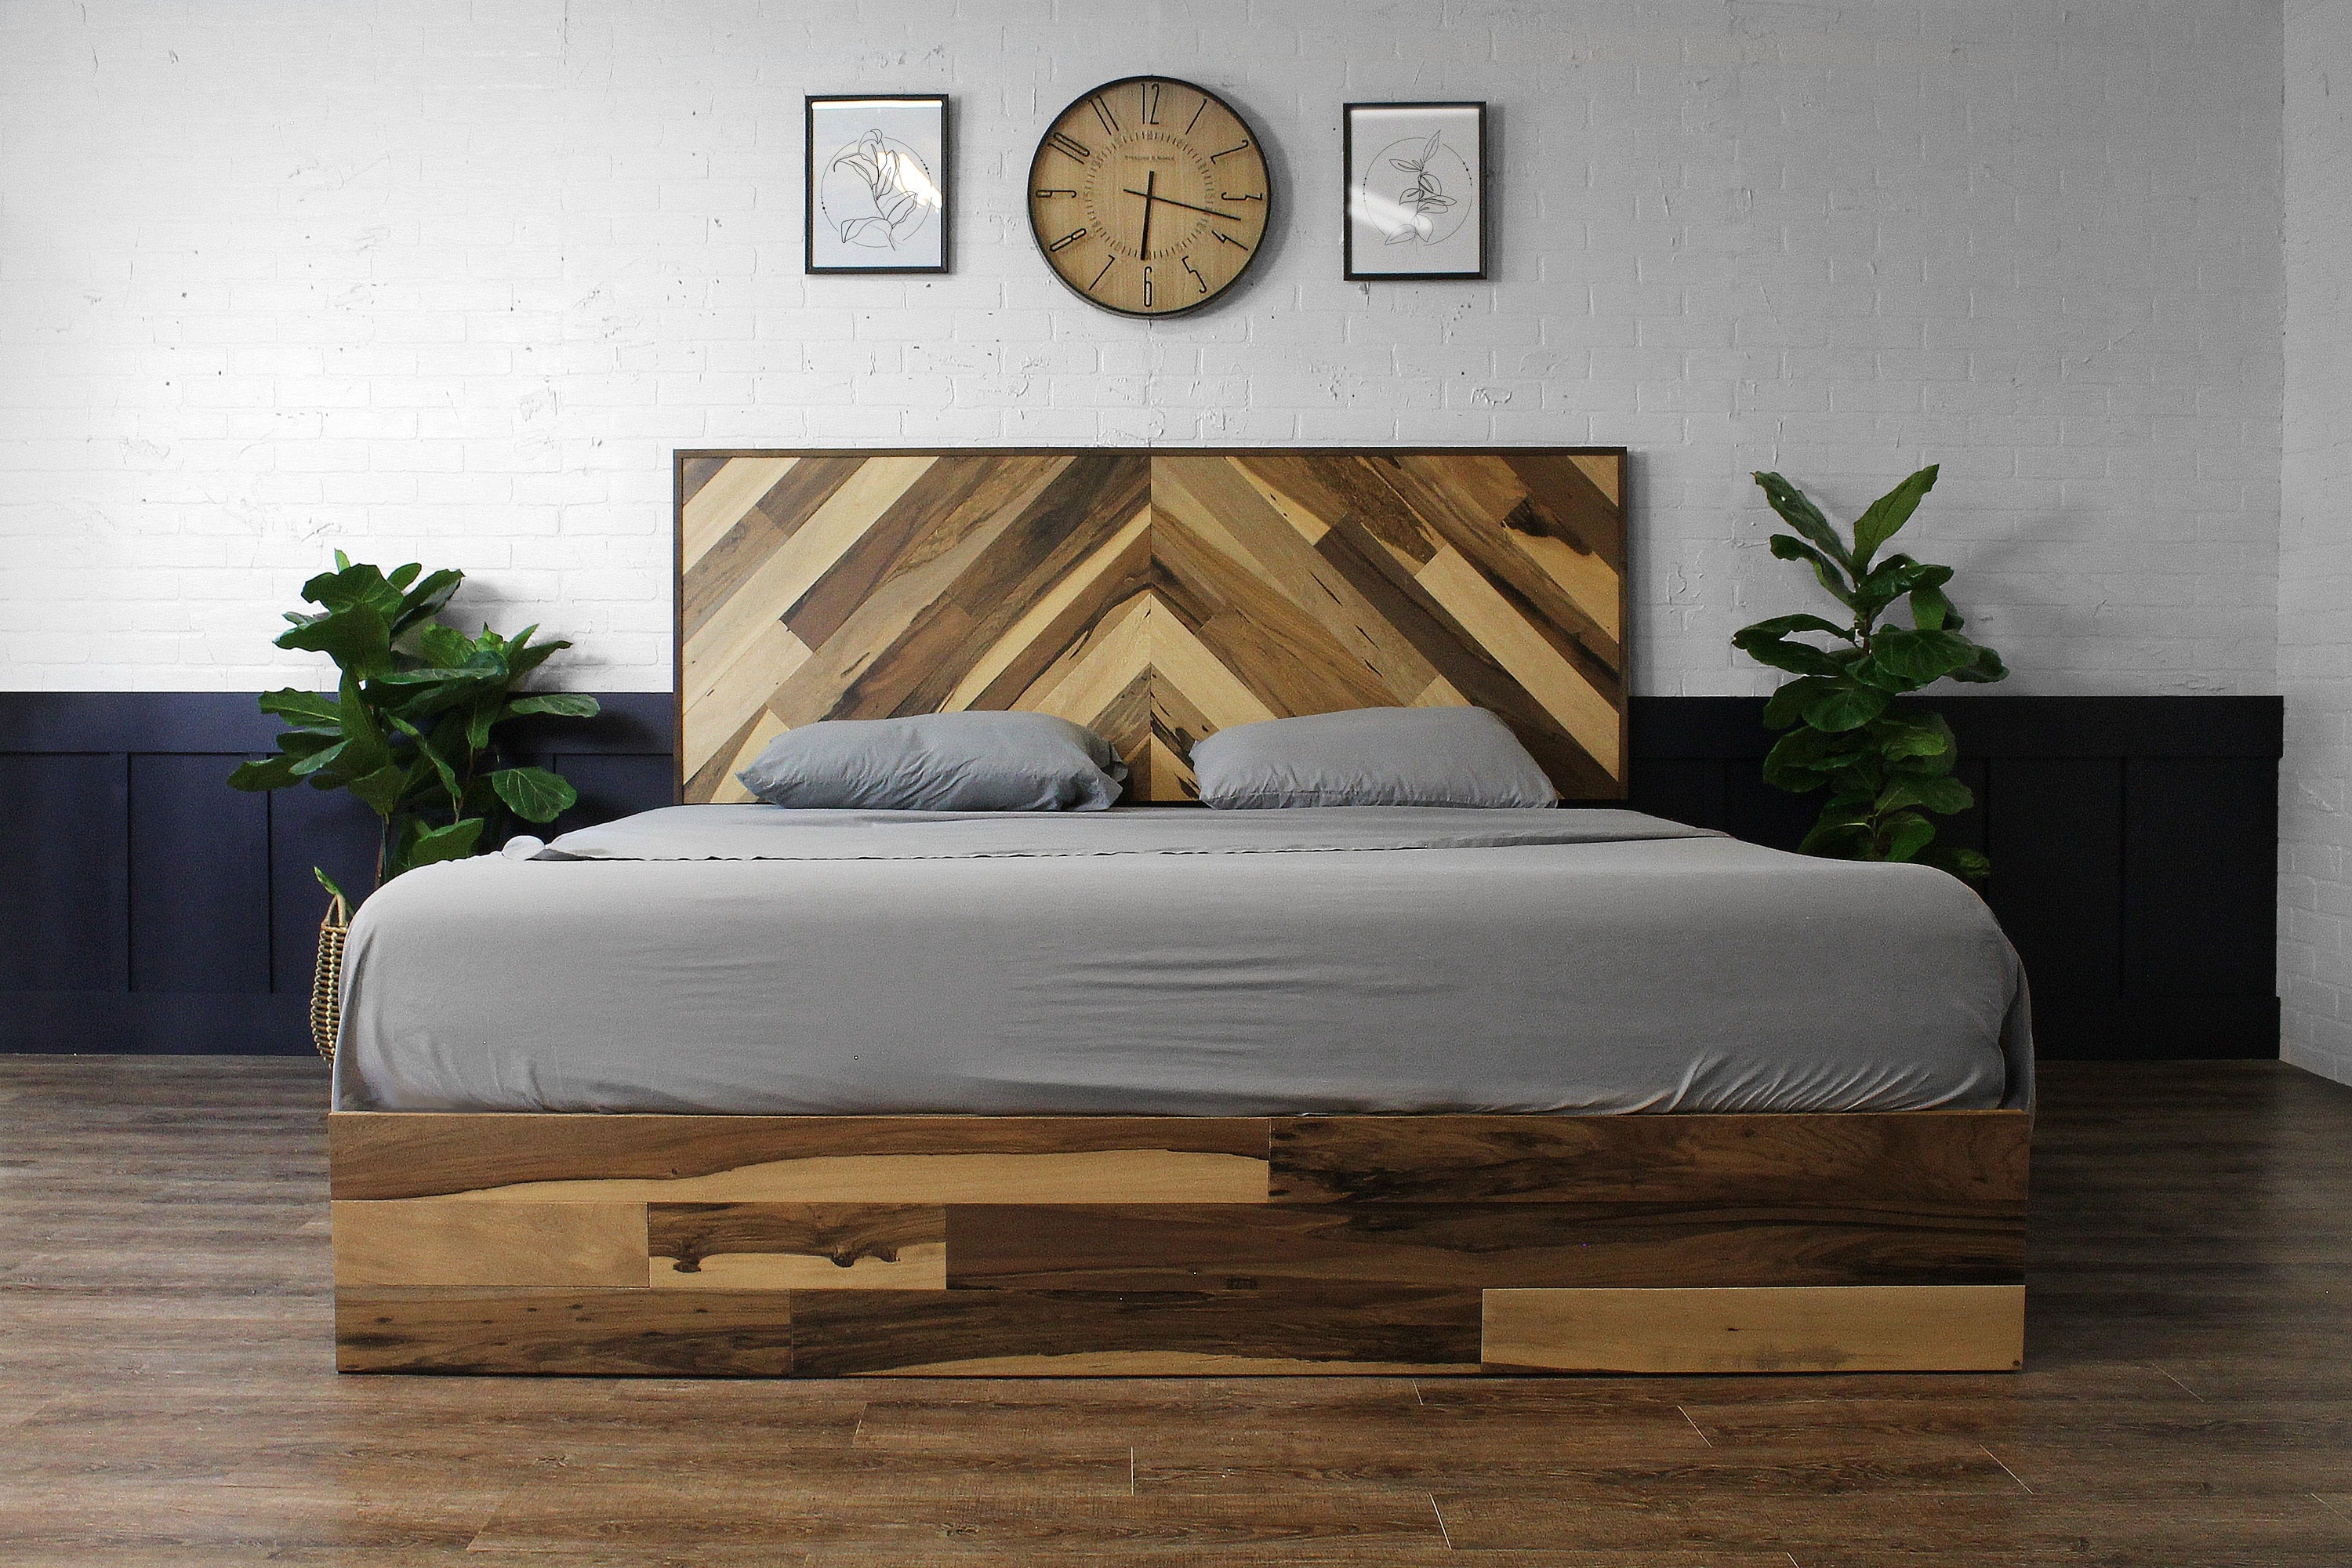 Mountaineer Bed Frame - Modern Rustic Style - Chevron - Handmade